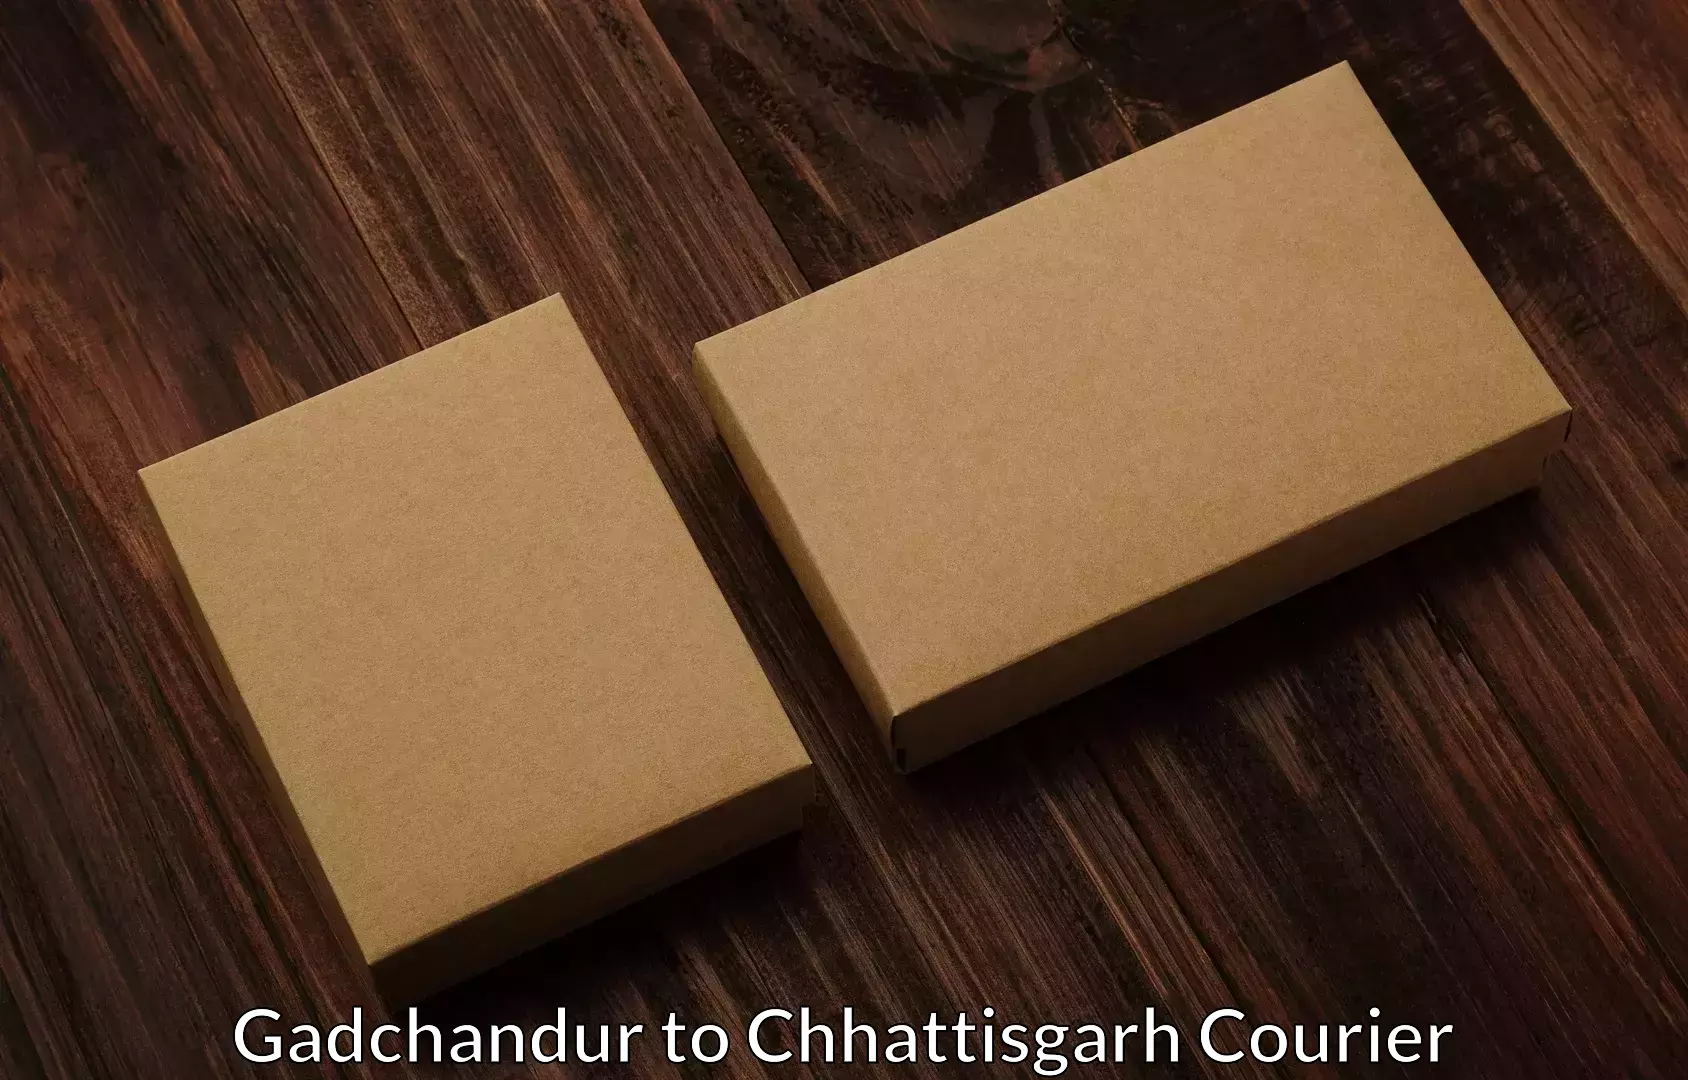 Home relocation experts Gadchandur to Patna Chhattisgarh